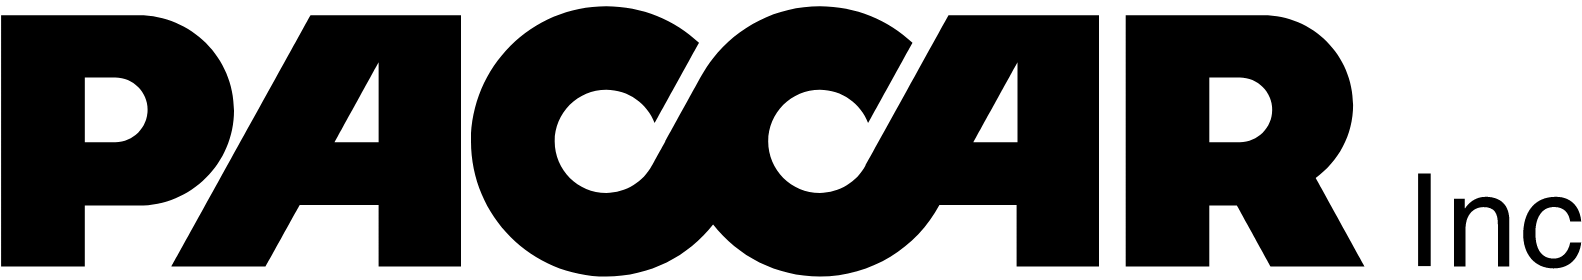 Paccar logo large (transparent PNG)